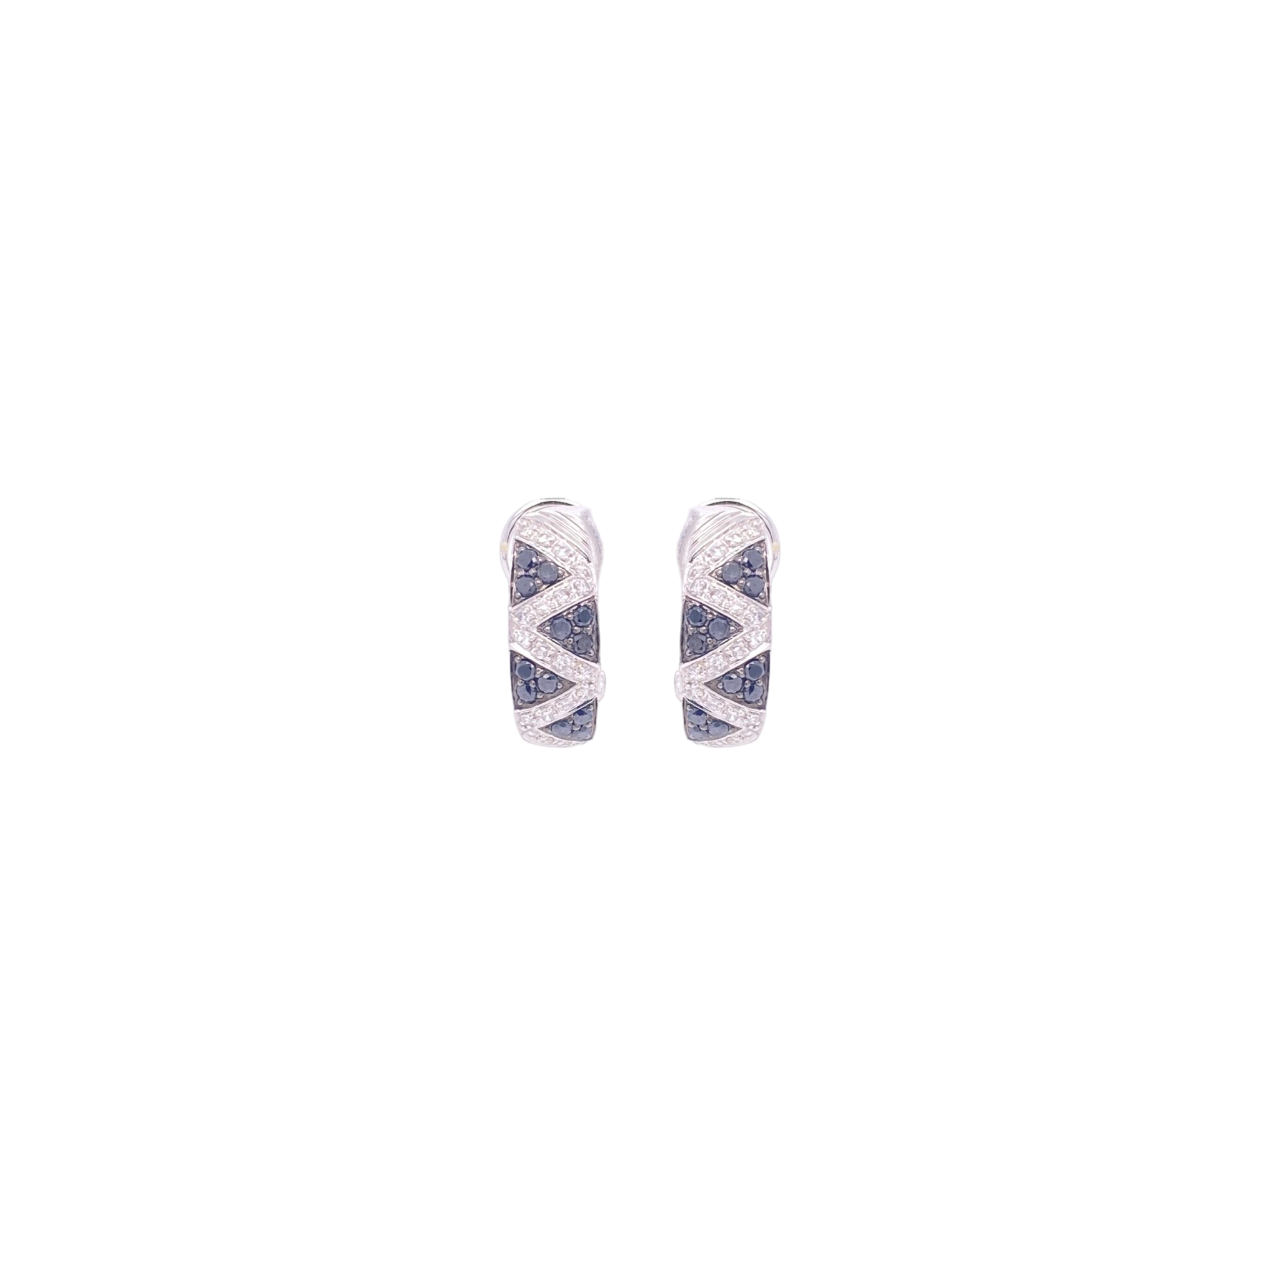 Black Diamond Earrings 14 Karat White Gold 0.83 Carats